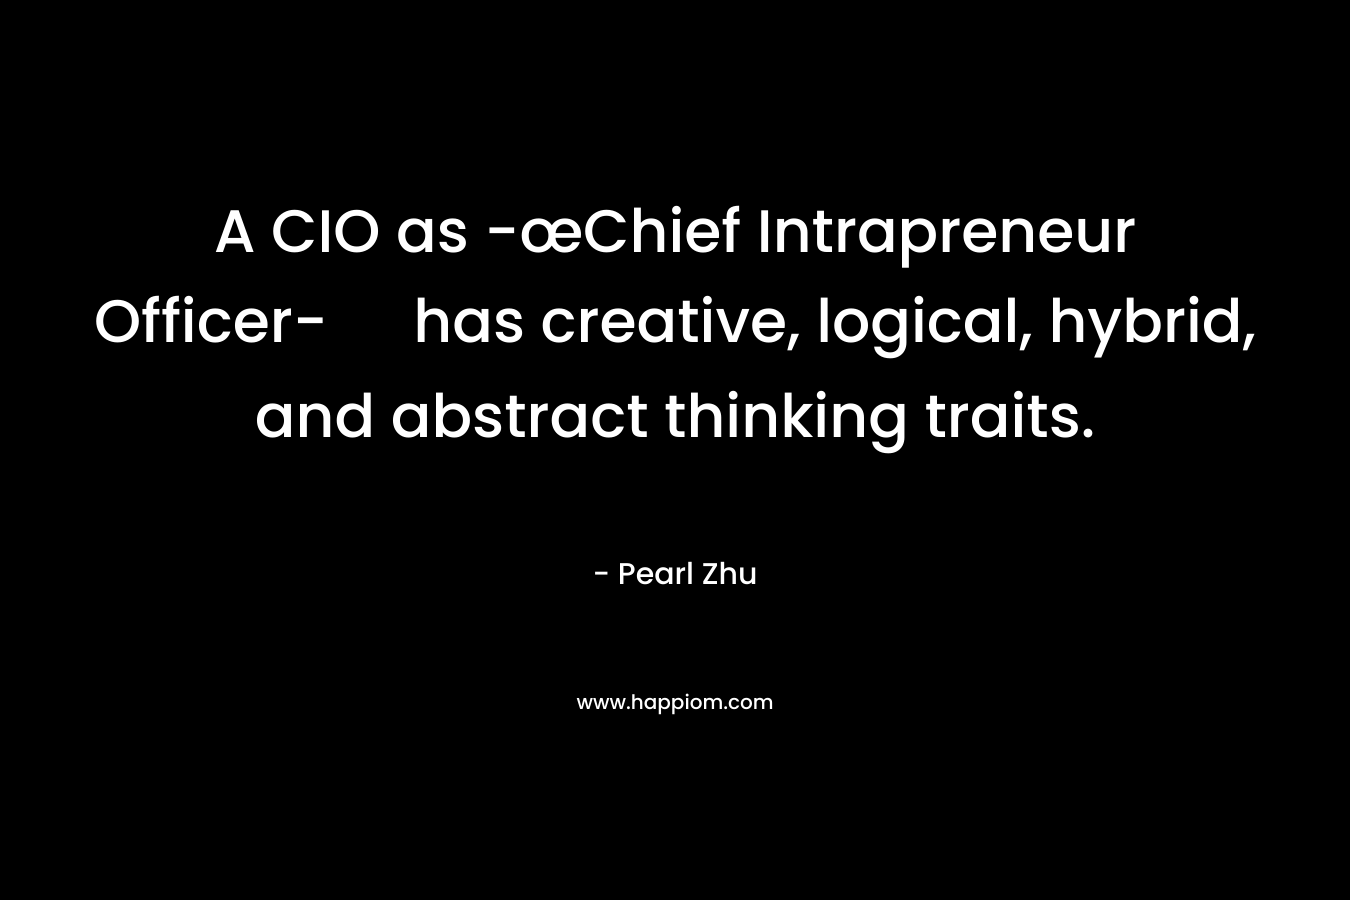 A CIO as -œChief Intrapreneur Officer- has creative, logical, hybrid, and abstract thinking traits.